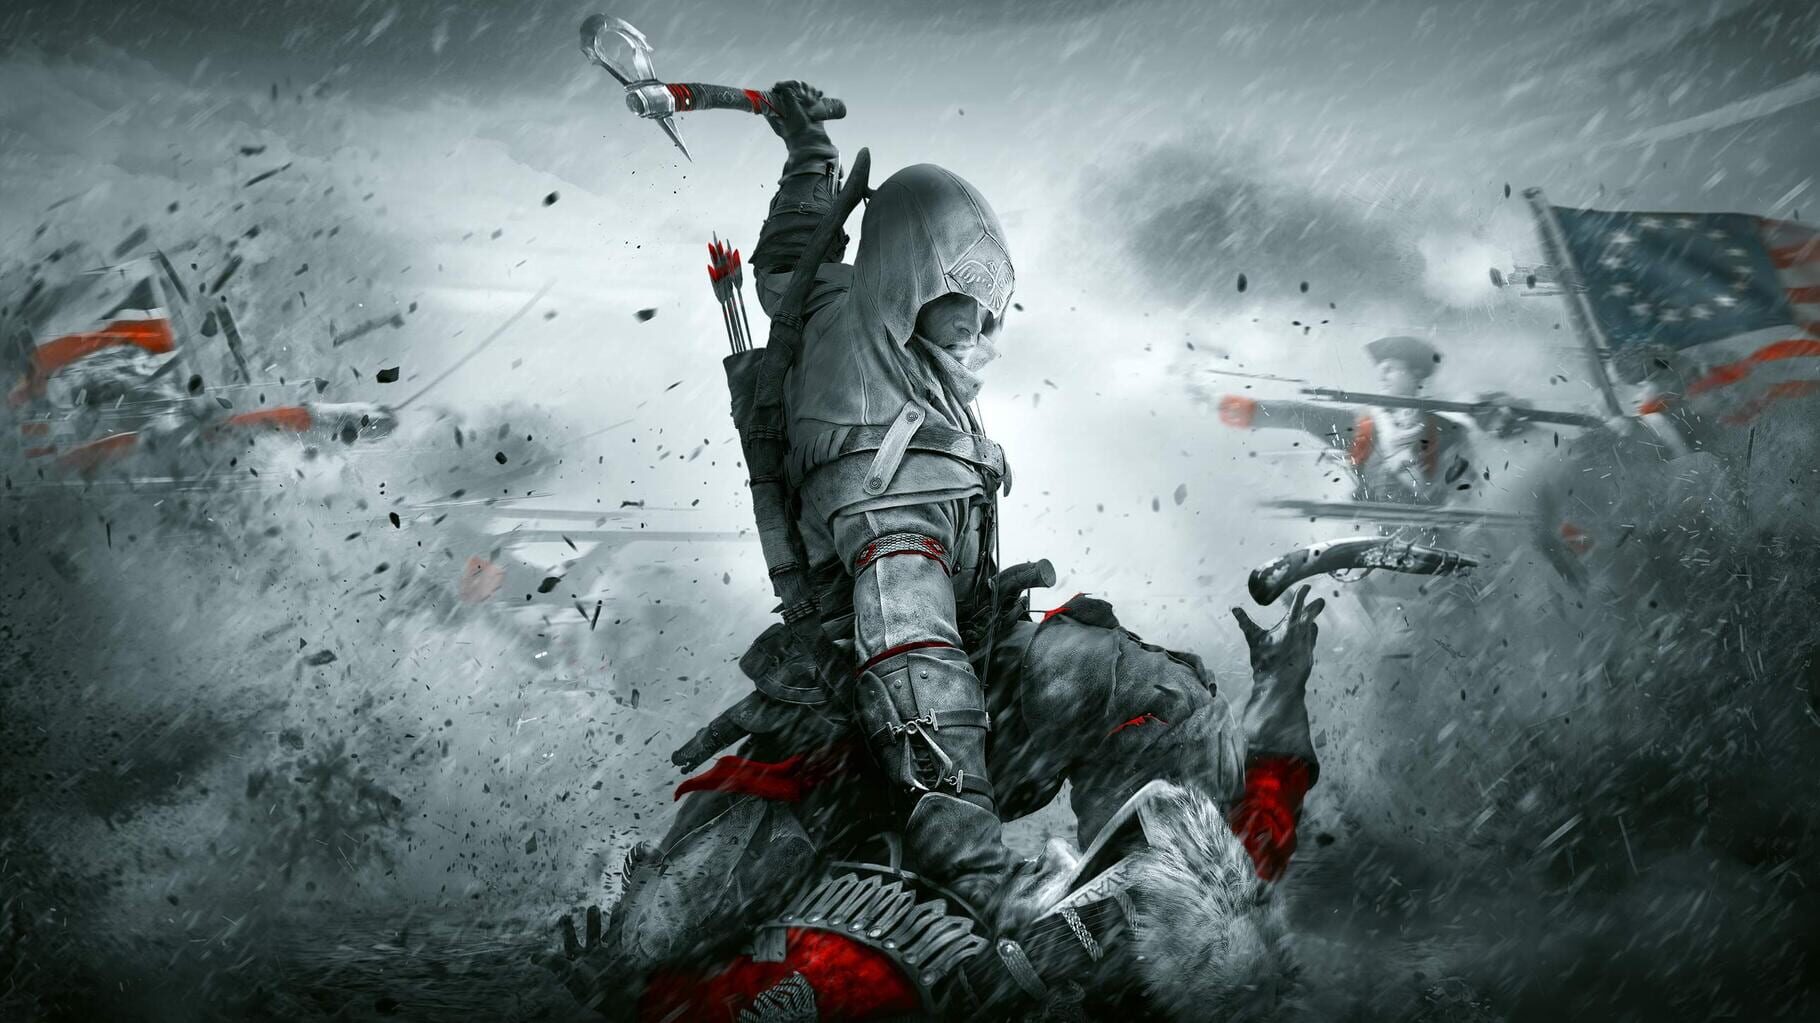 Assassin's Creed III Remastered artwork